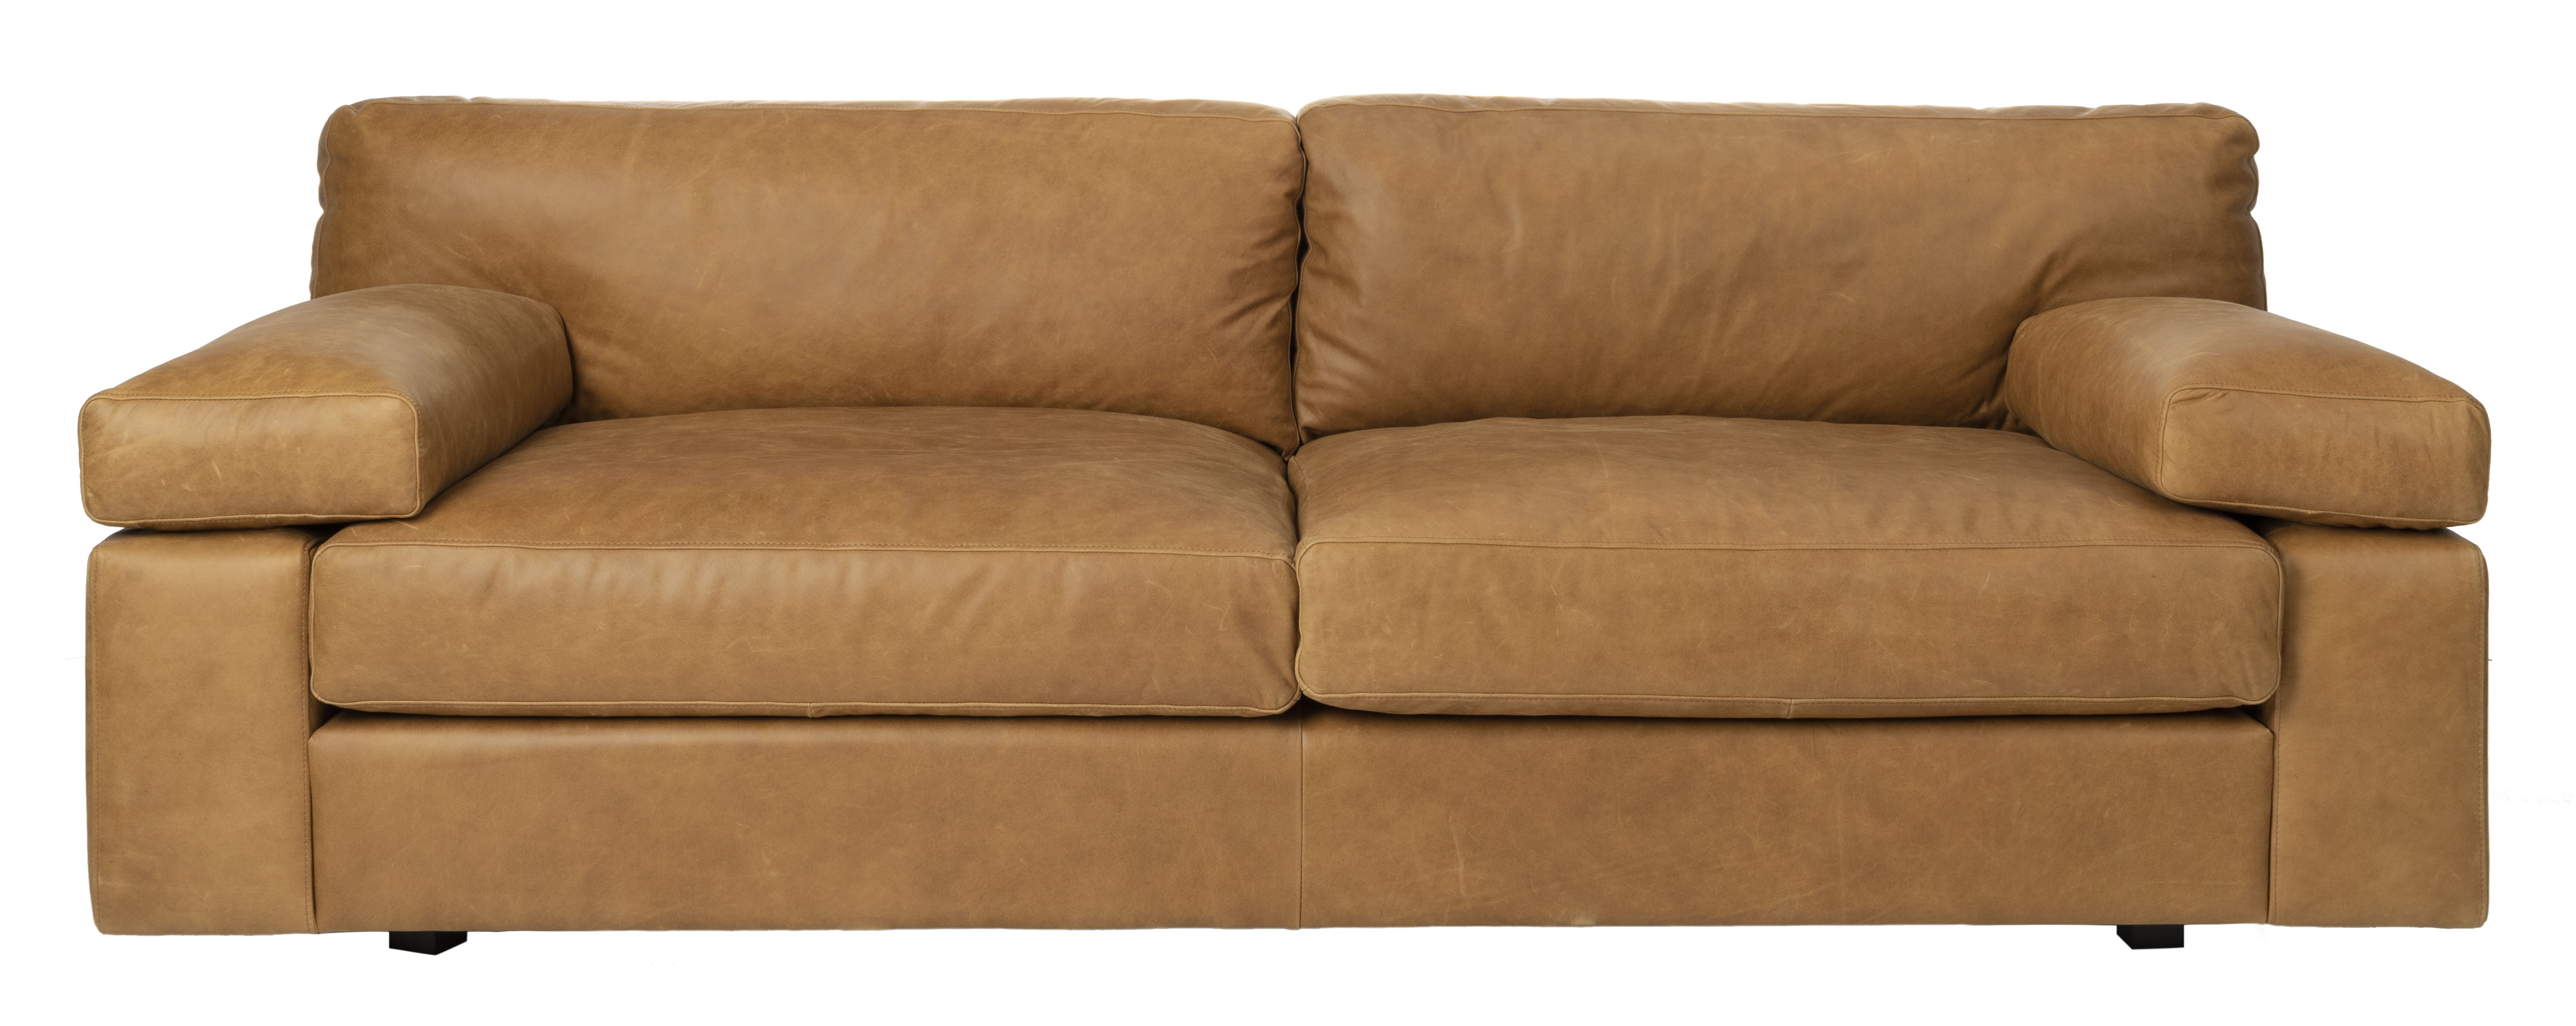 Sampson Italian Leather Sofa - Light Brown - Arlo Home - Image 1